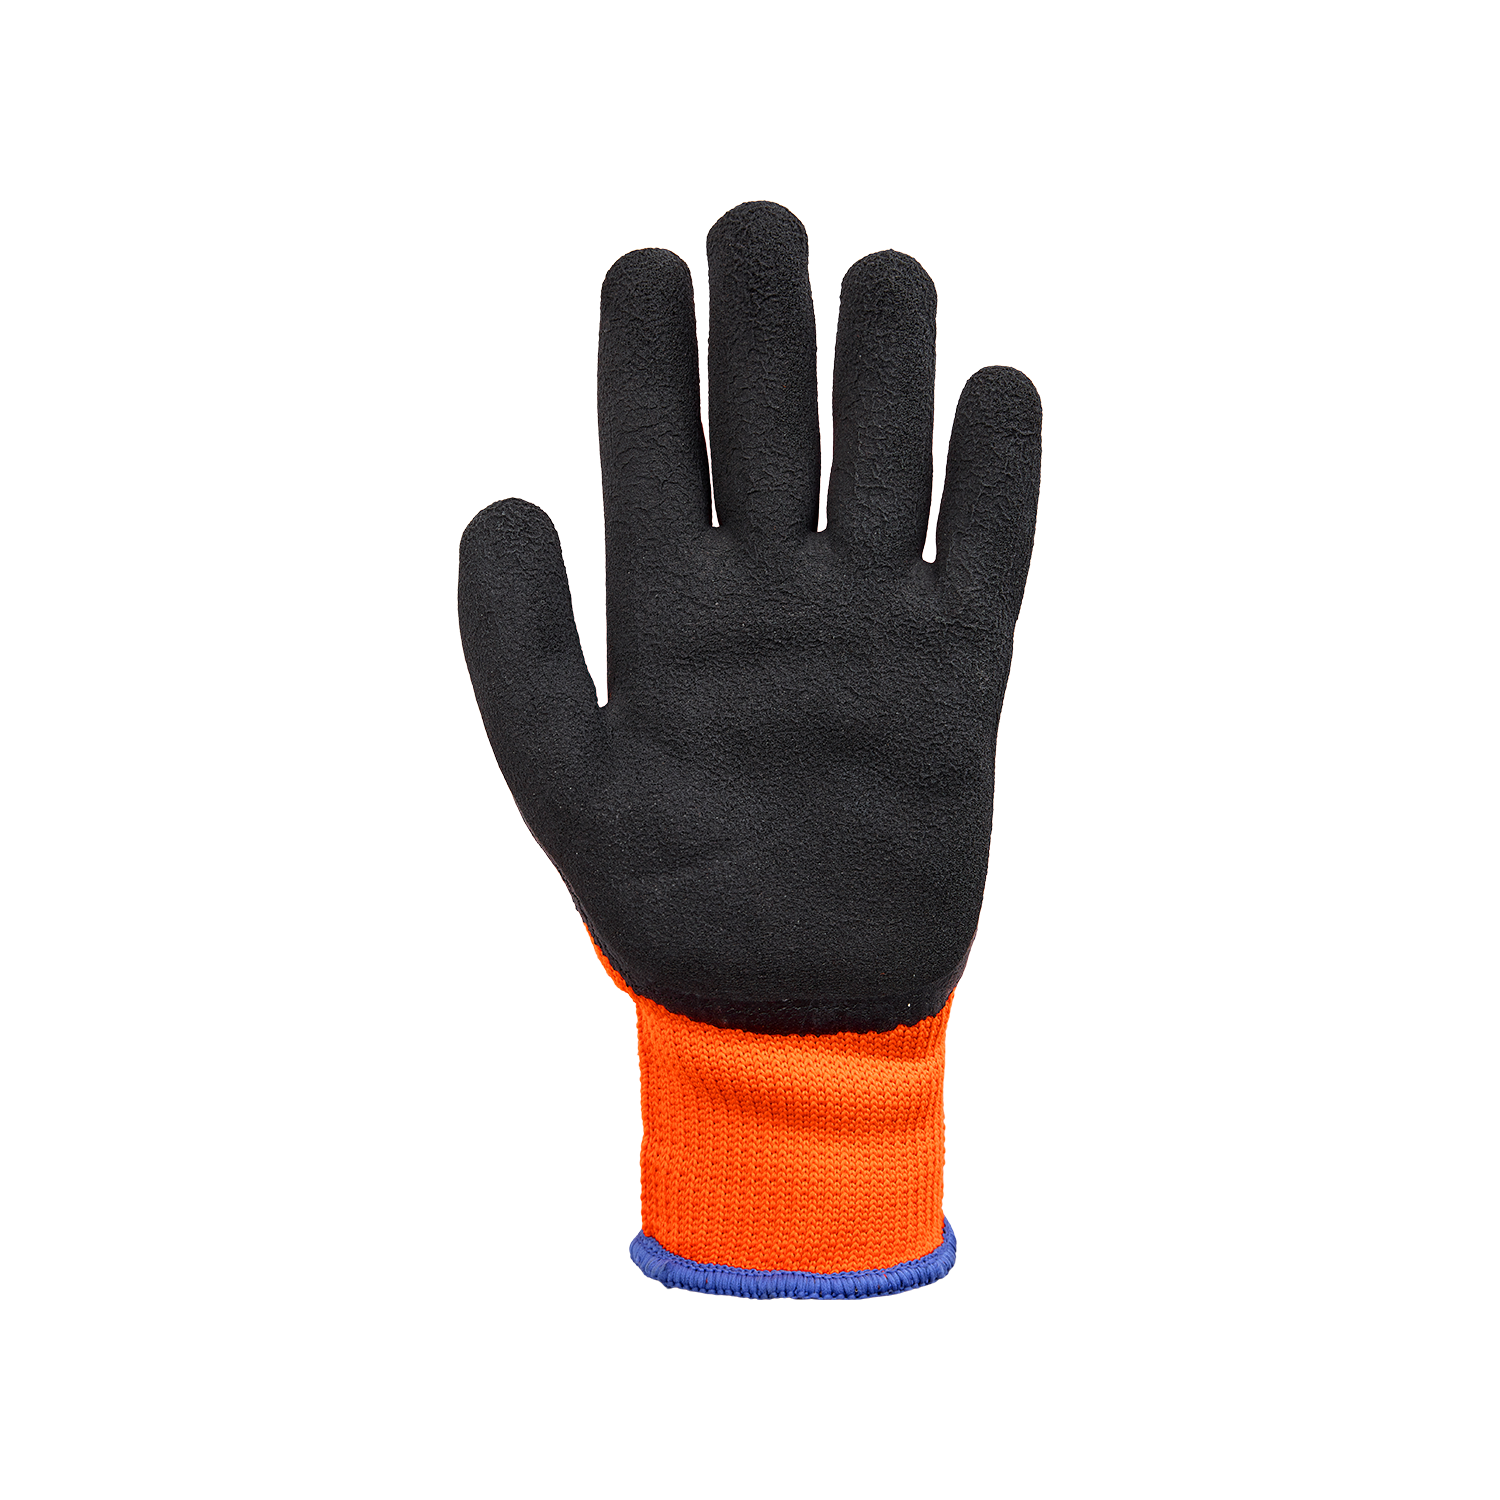 NORSE Polar winter assembly gloves size 8